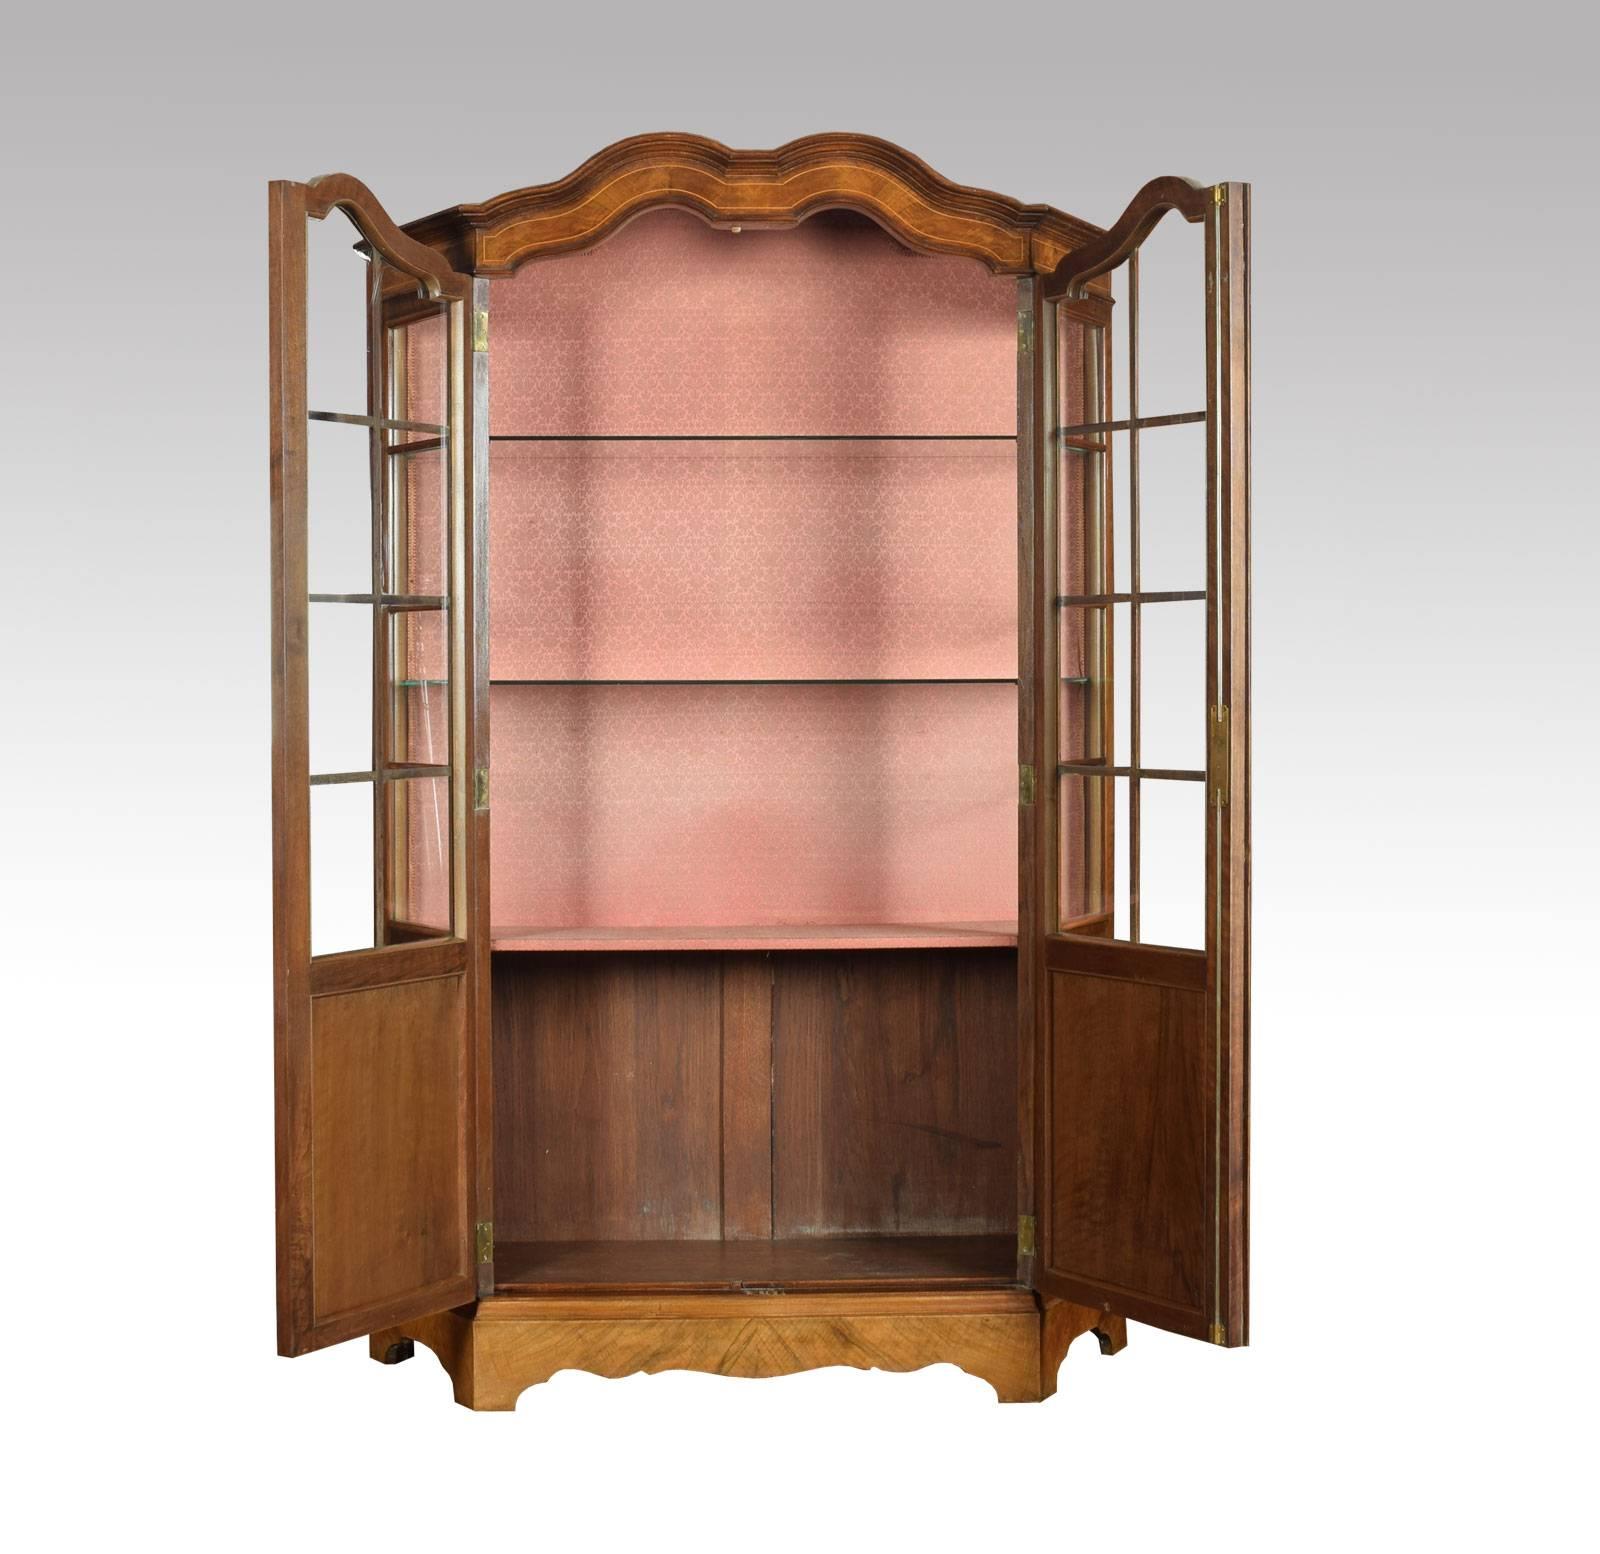 Victorian Walnut Inlaid Display Cabinet